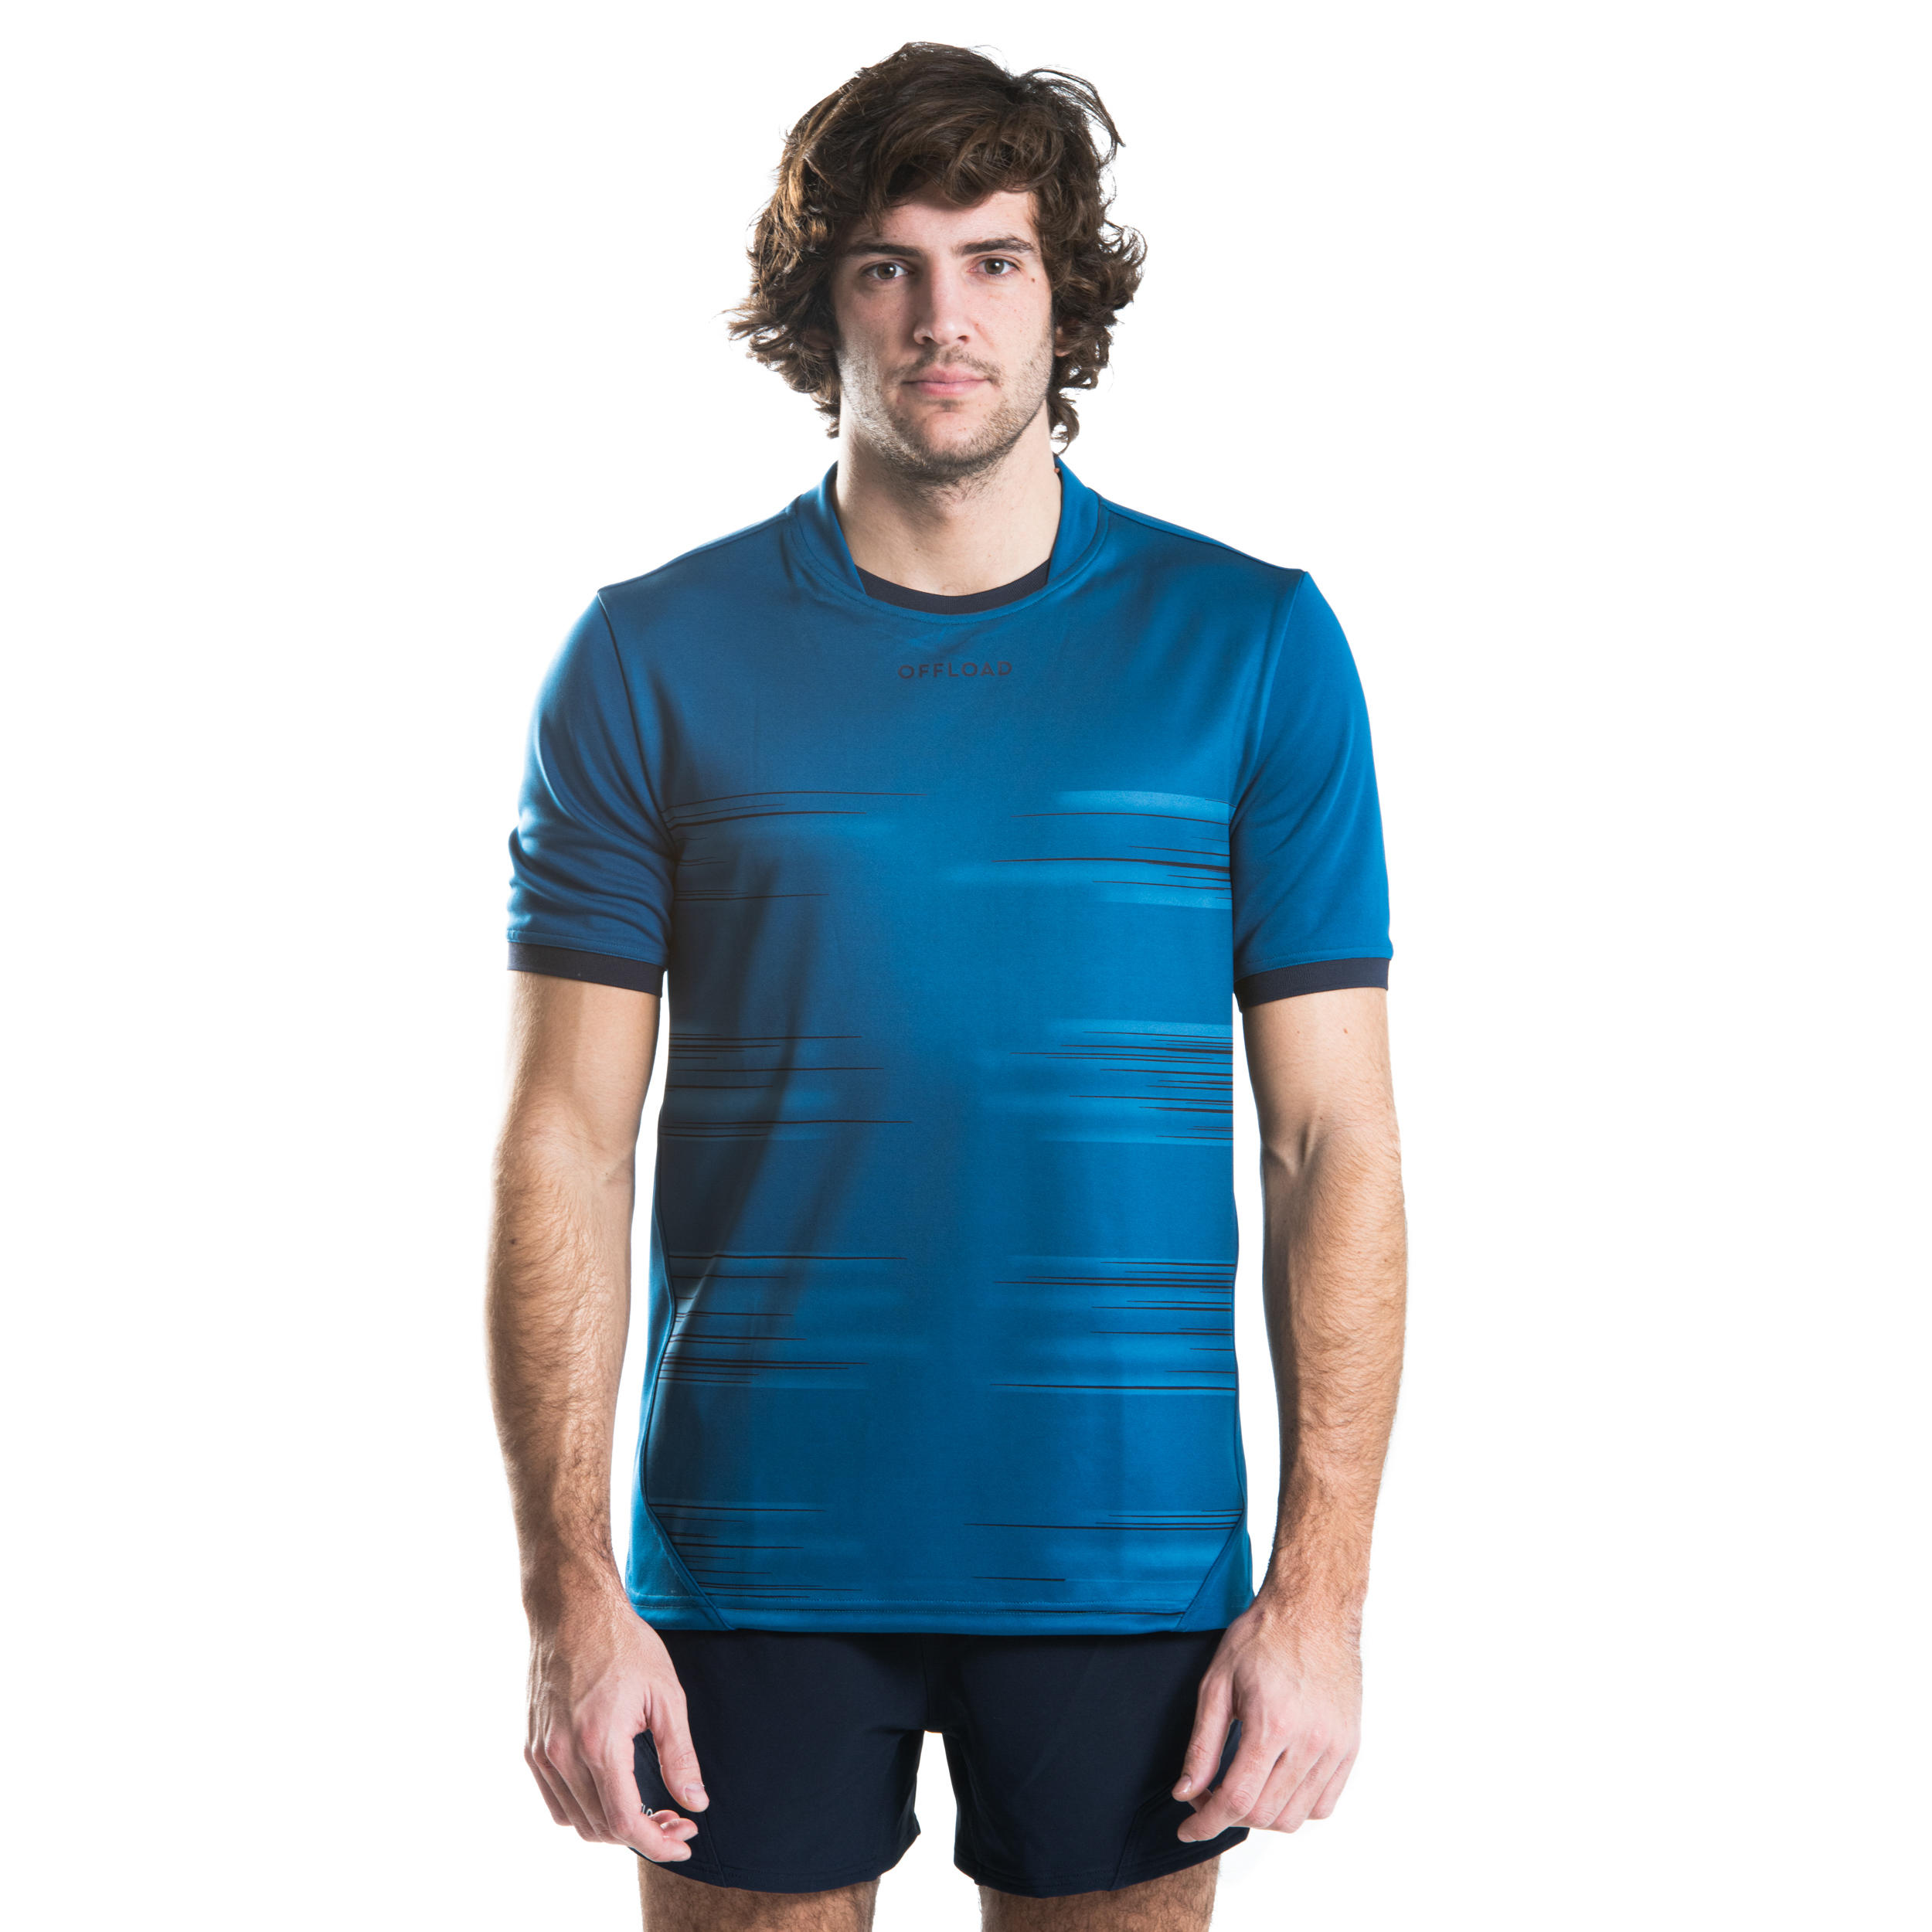 Men's Short-Sleeved Rugby Shirt R500 - Blue 5/8